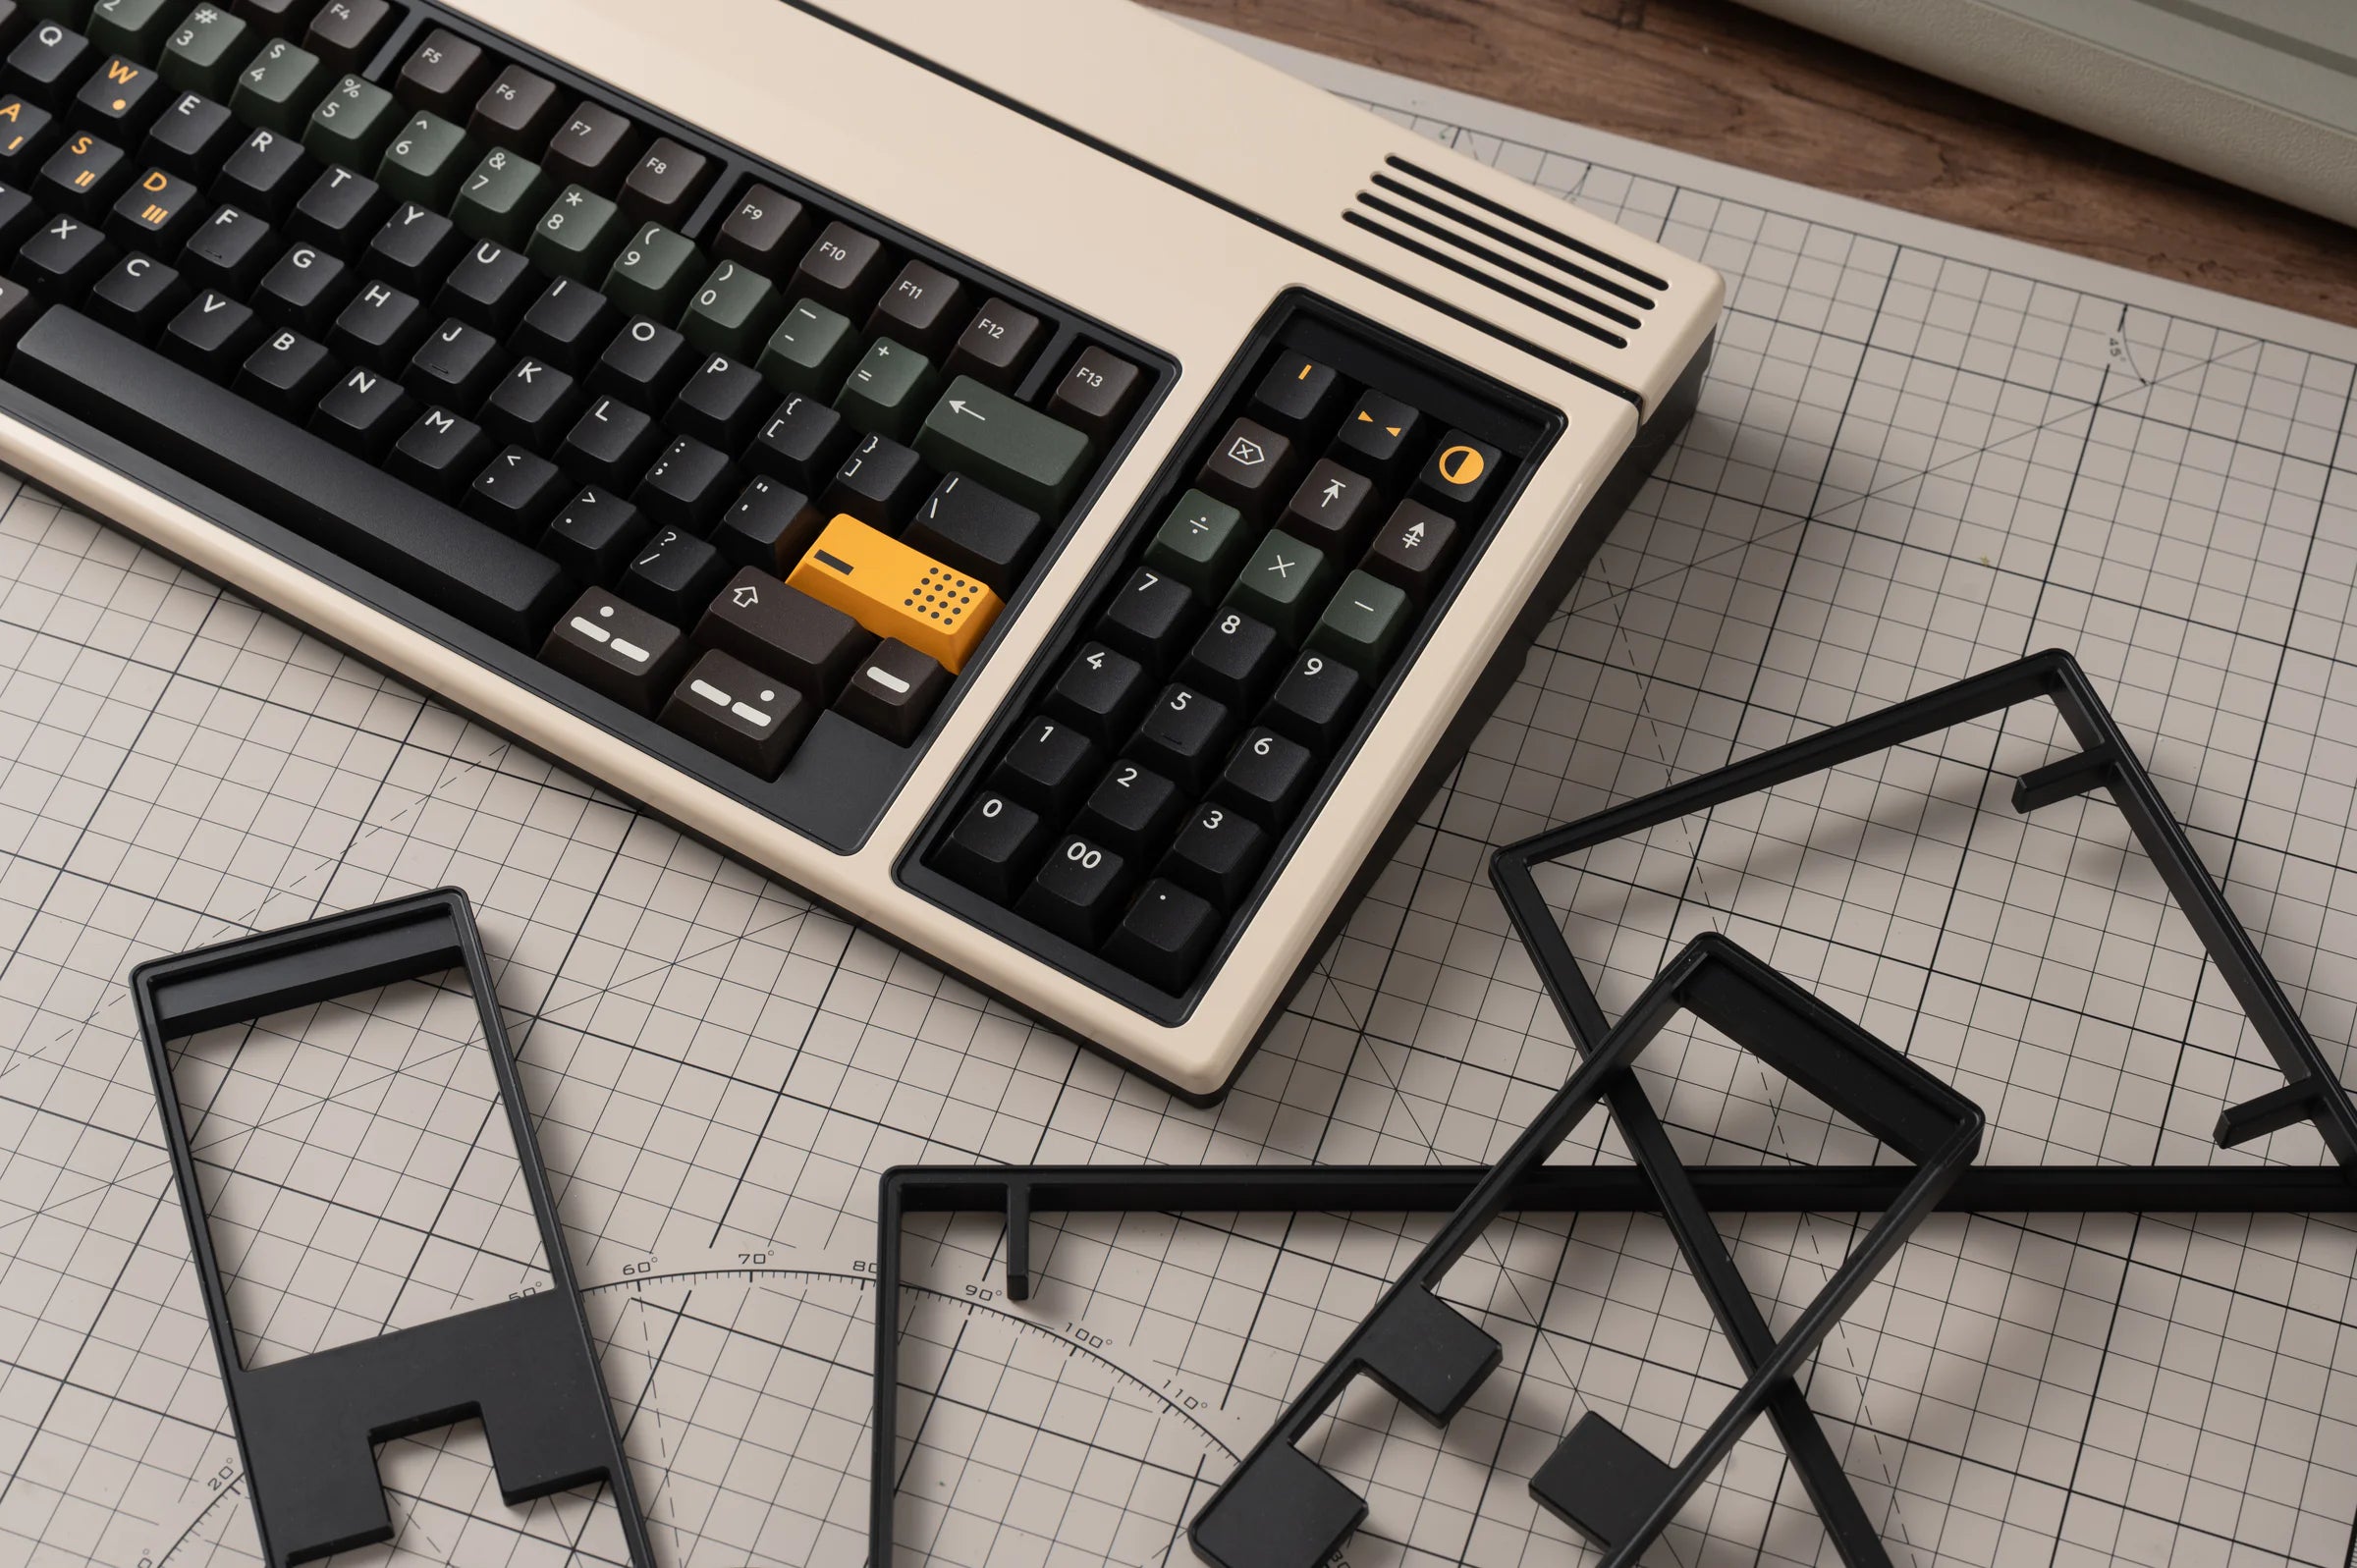 Deadline Studio T9 Keyboard Kit  - Group-Buy